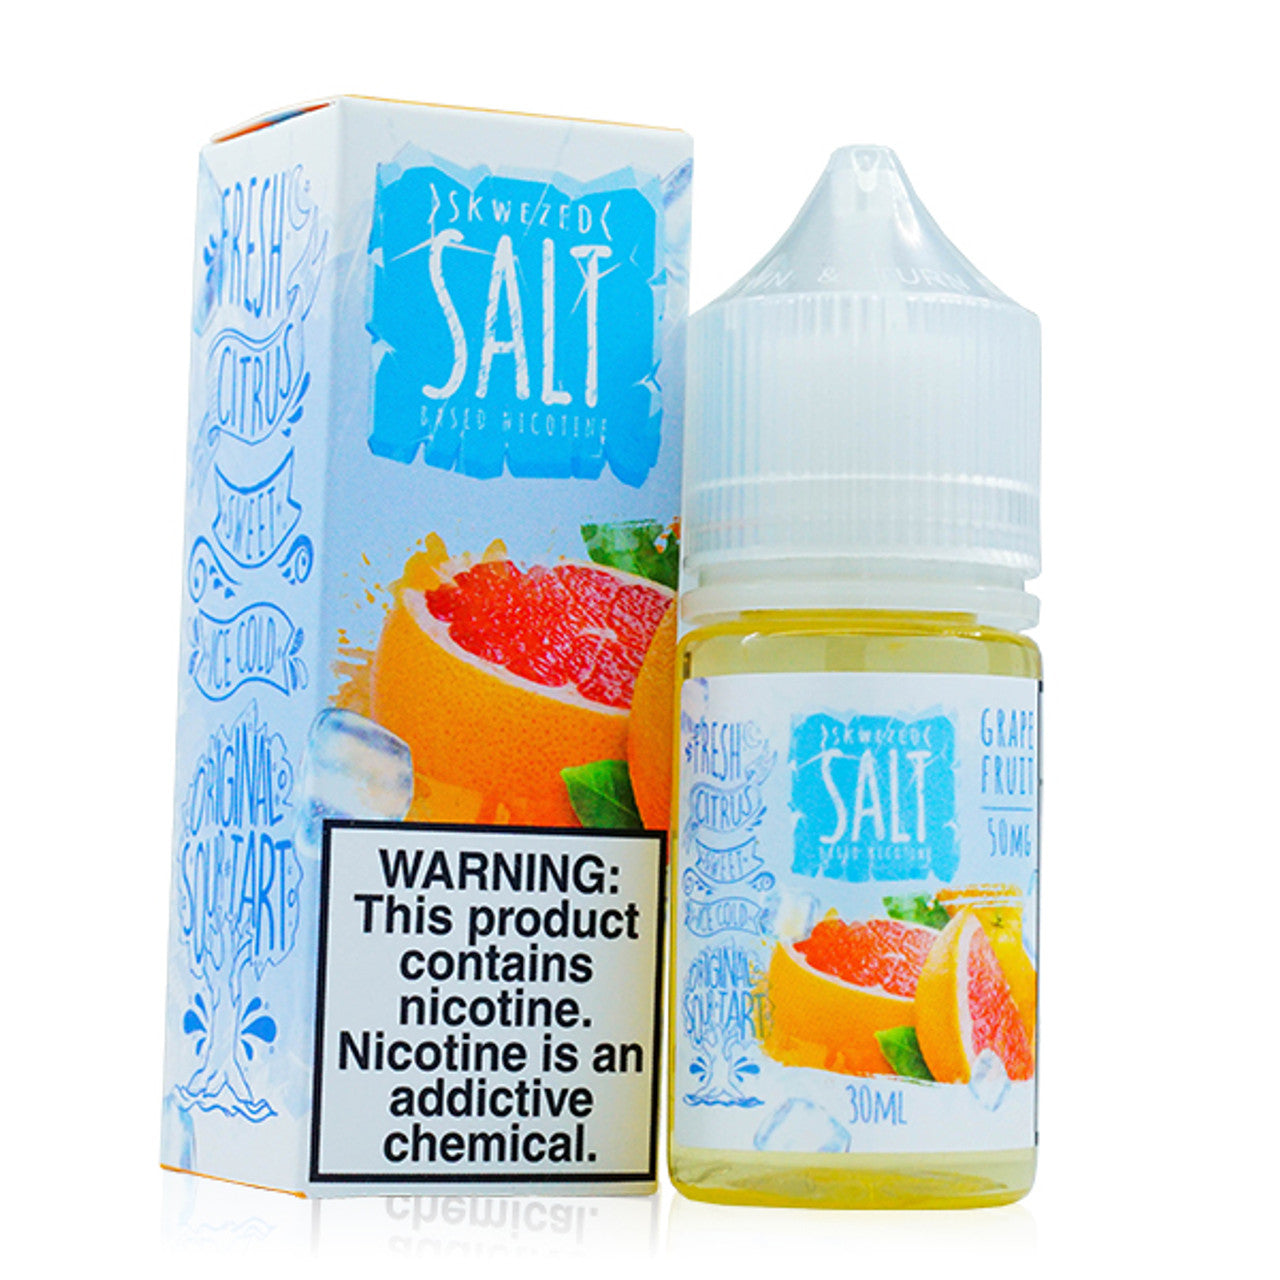 Skwezed Salt Series E-Liquid 30mL (Salt Nic) Grapefruit Ice with Packaging